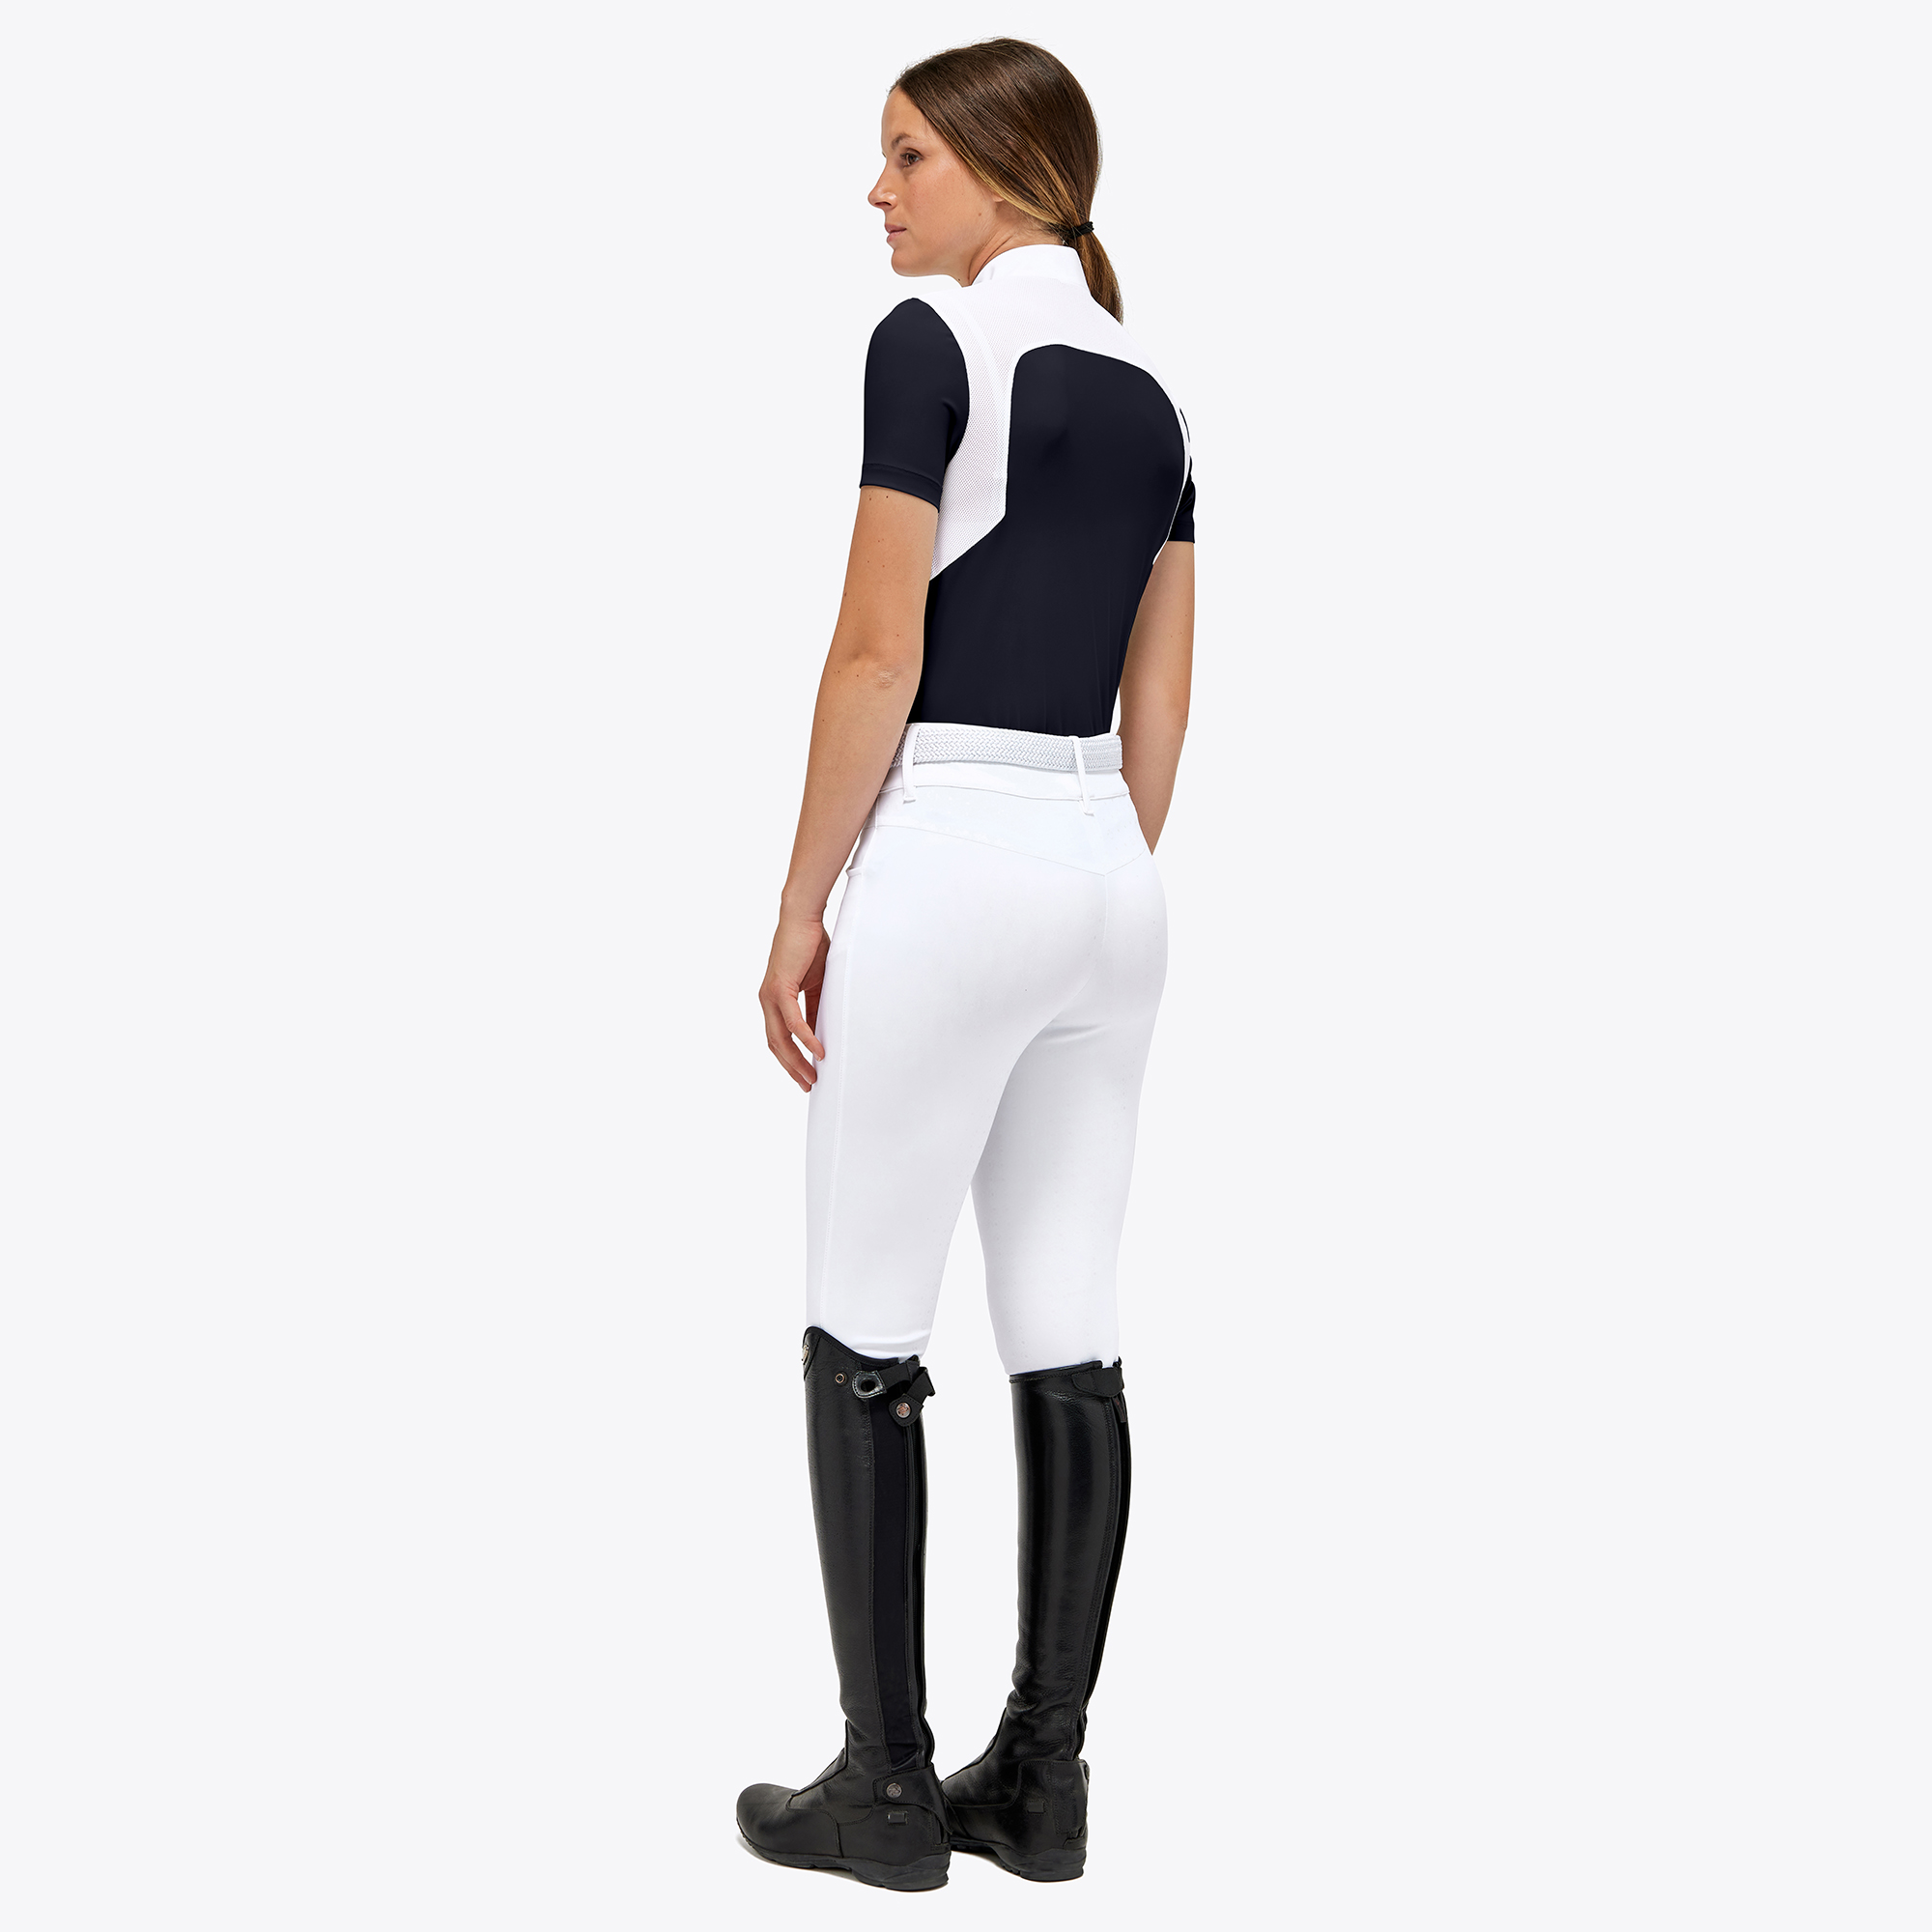 CAVALLERIA TOSCANA elegantes Damen Kurzarm Turniershirt Jersey Mesh - white/knit - XL - 5